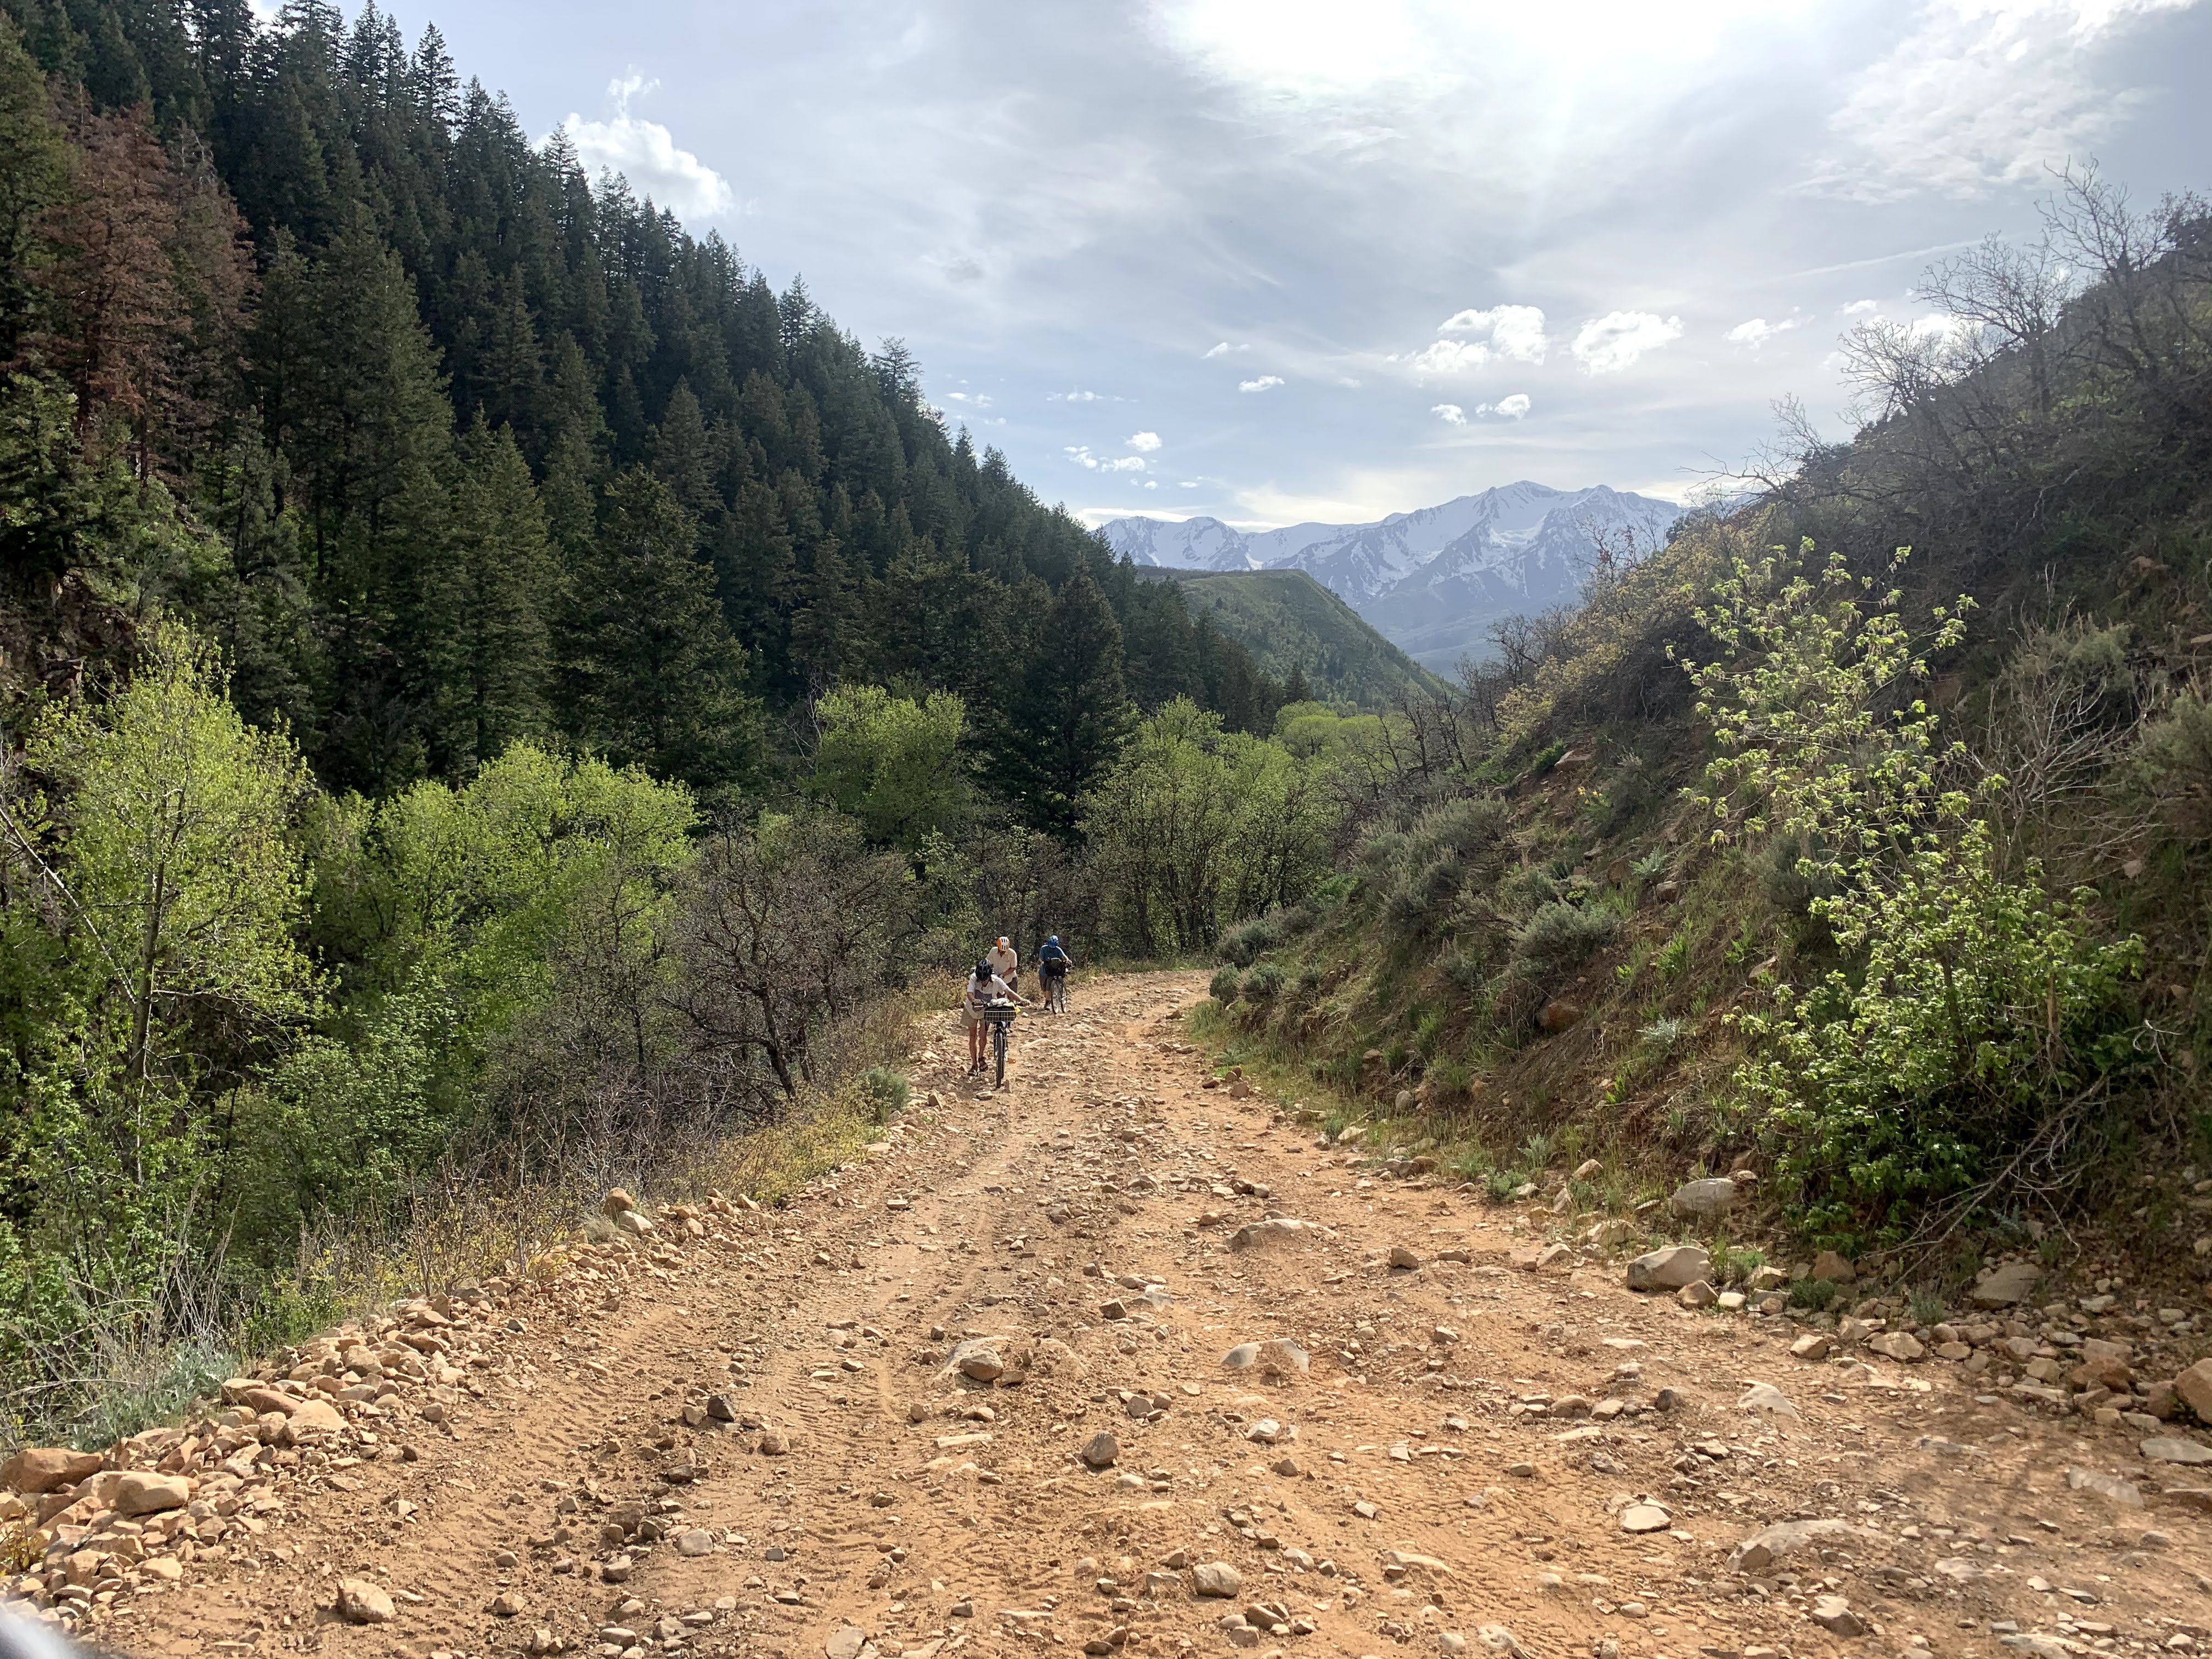 More Trail